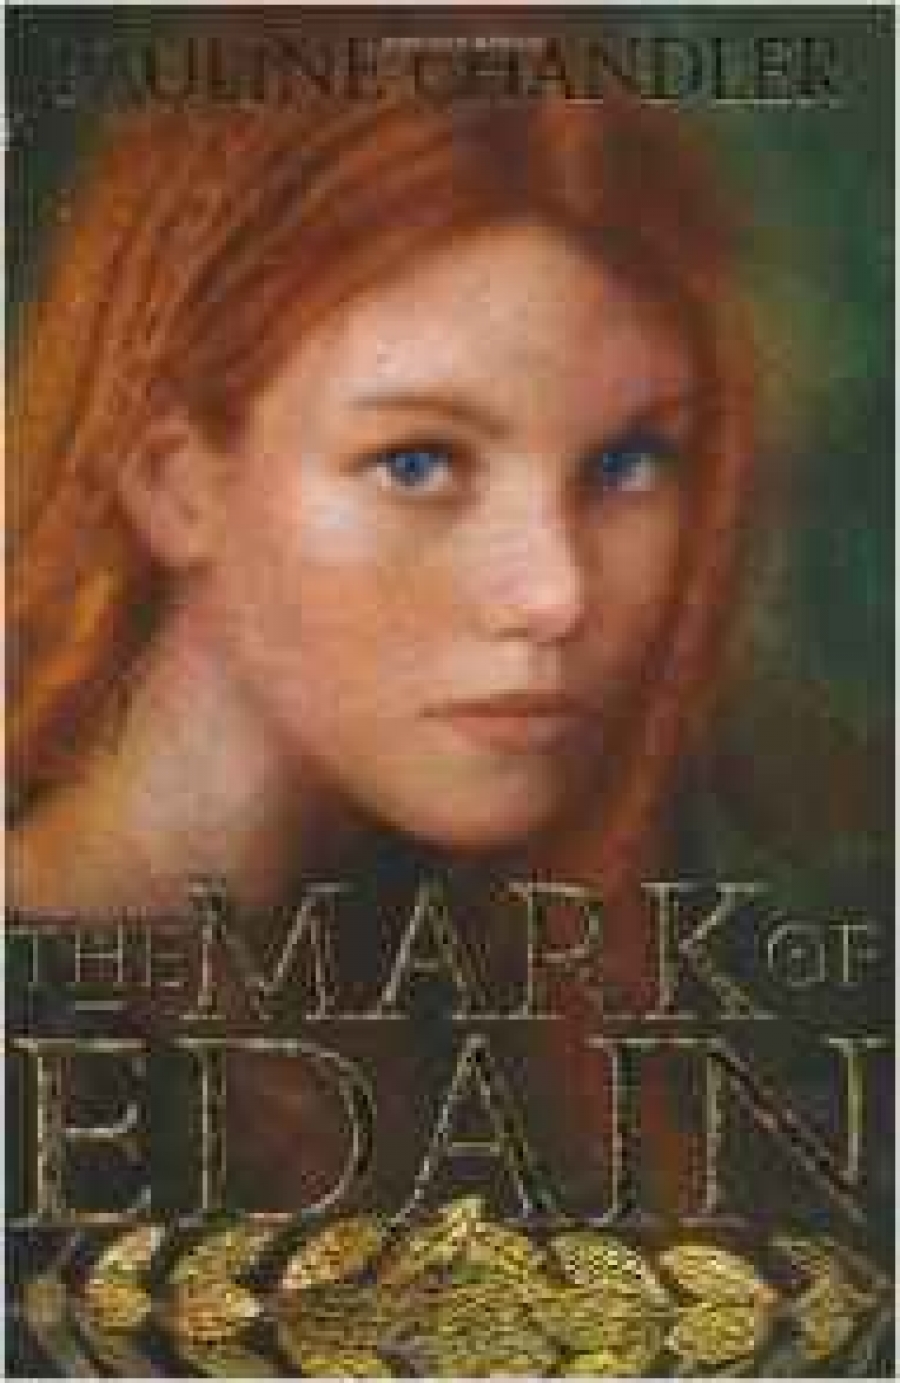 Chandler p,mark of edain (oxed) pb 